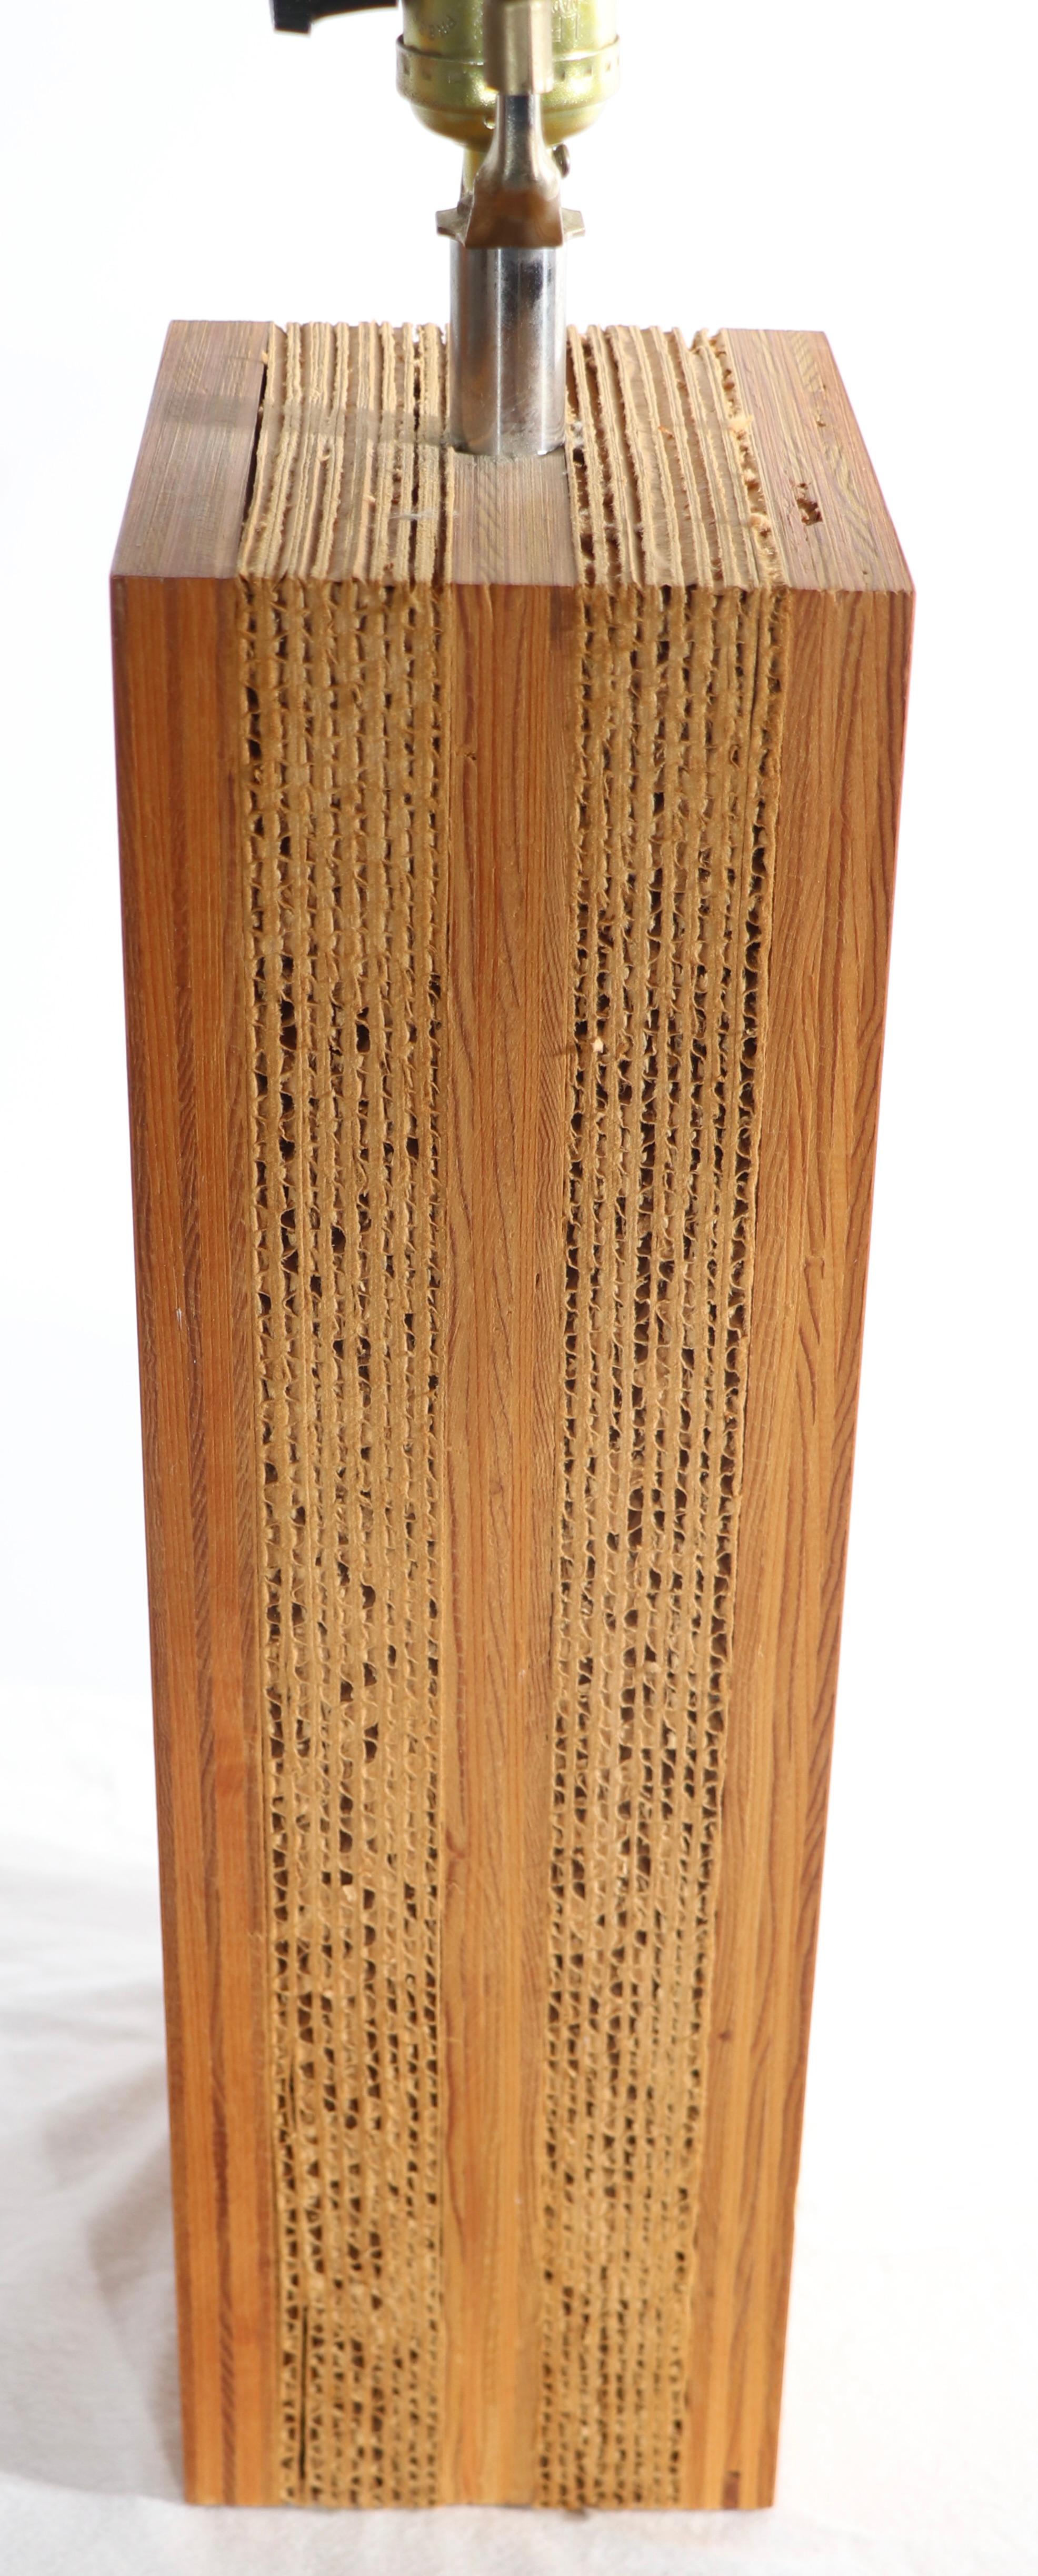 Ultrasuede Pr. Cardboard Plywood and Ultra Suede Table Lamps by Gregory Van Pelt